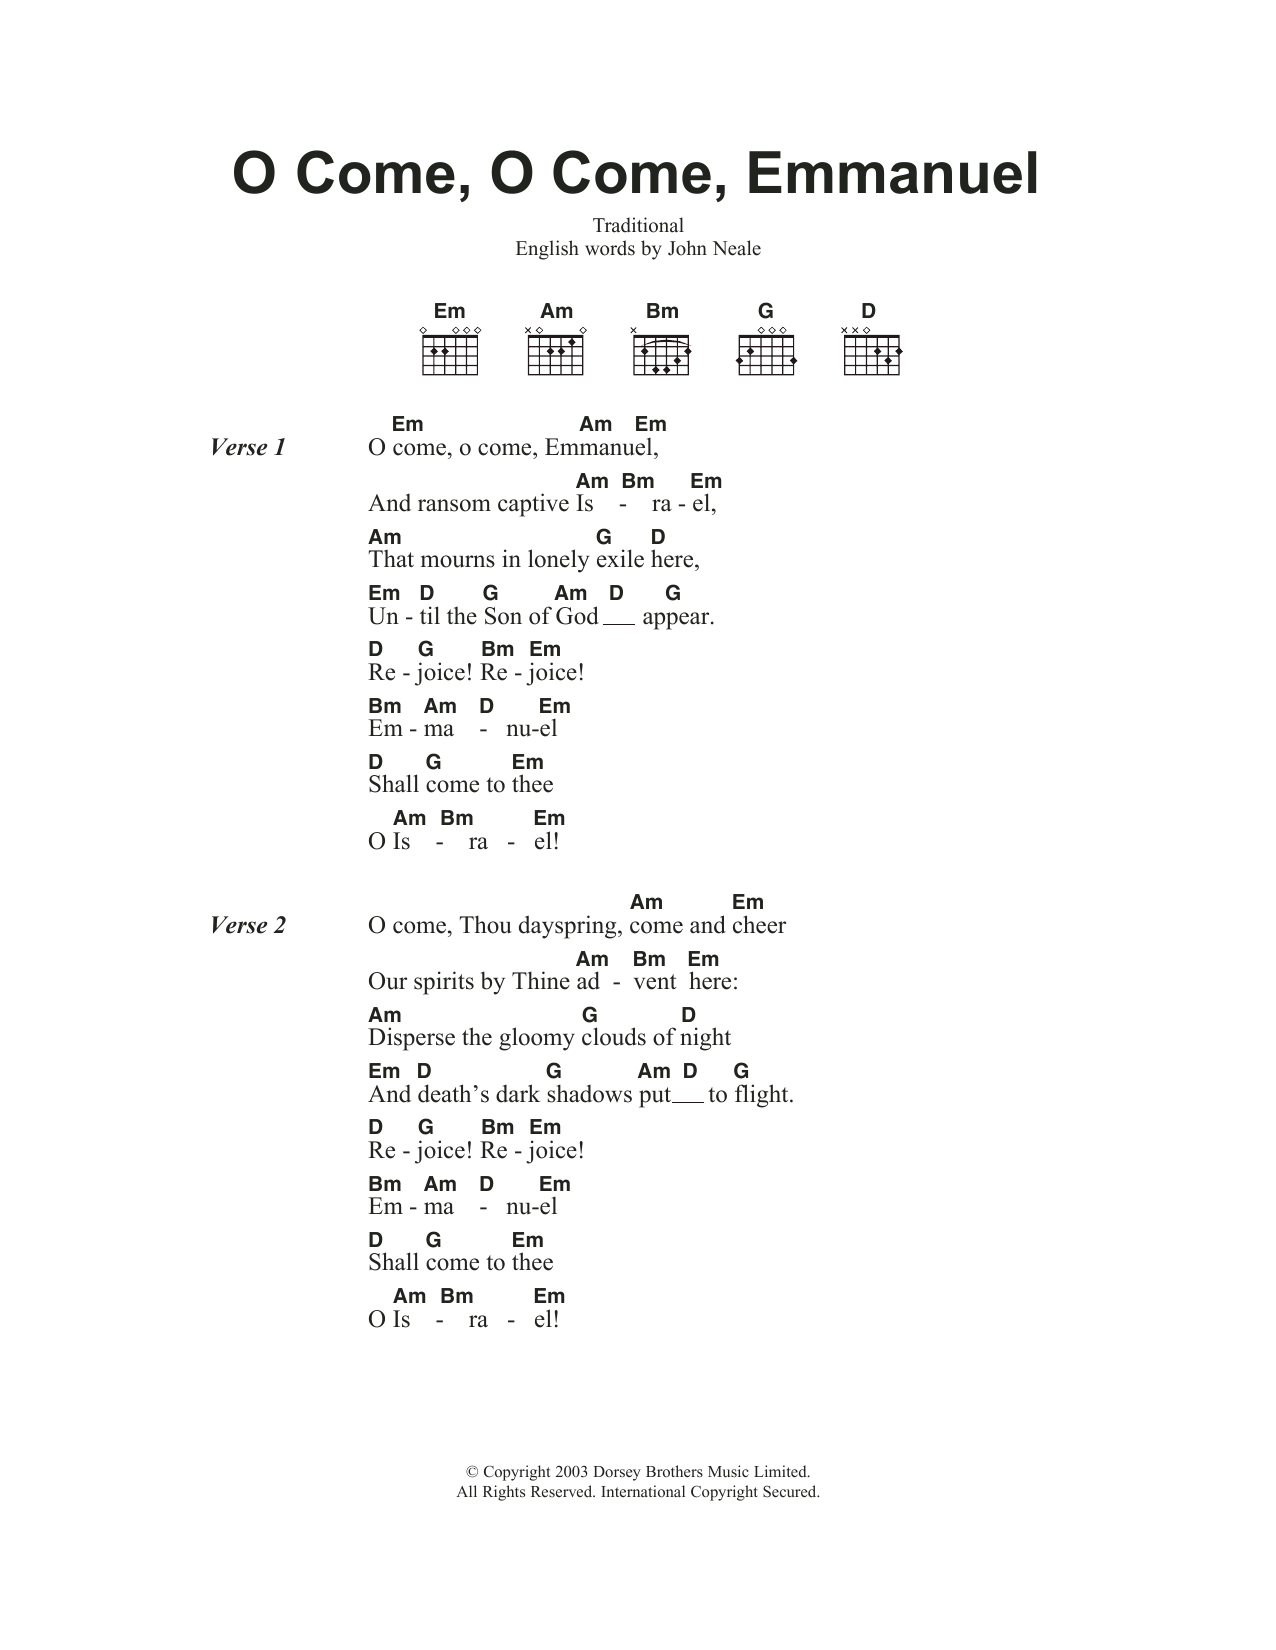 Traditional Carol O Come, O Come, Emmanuel Sheet Music Notes & Chords for Ukulele - Download or Print PDF